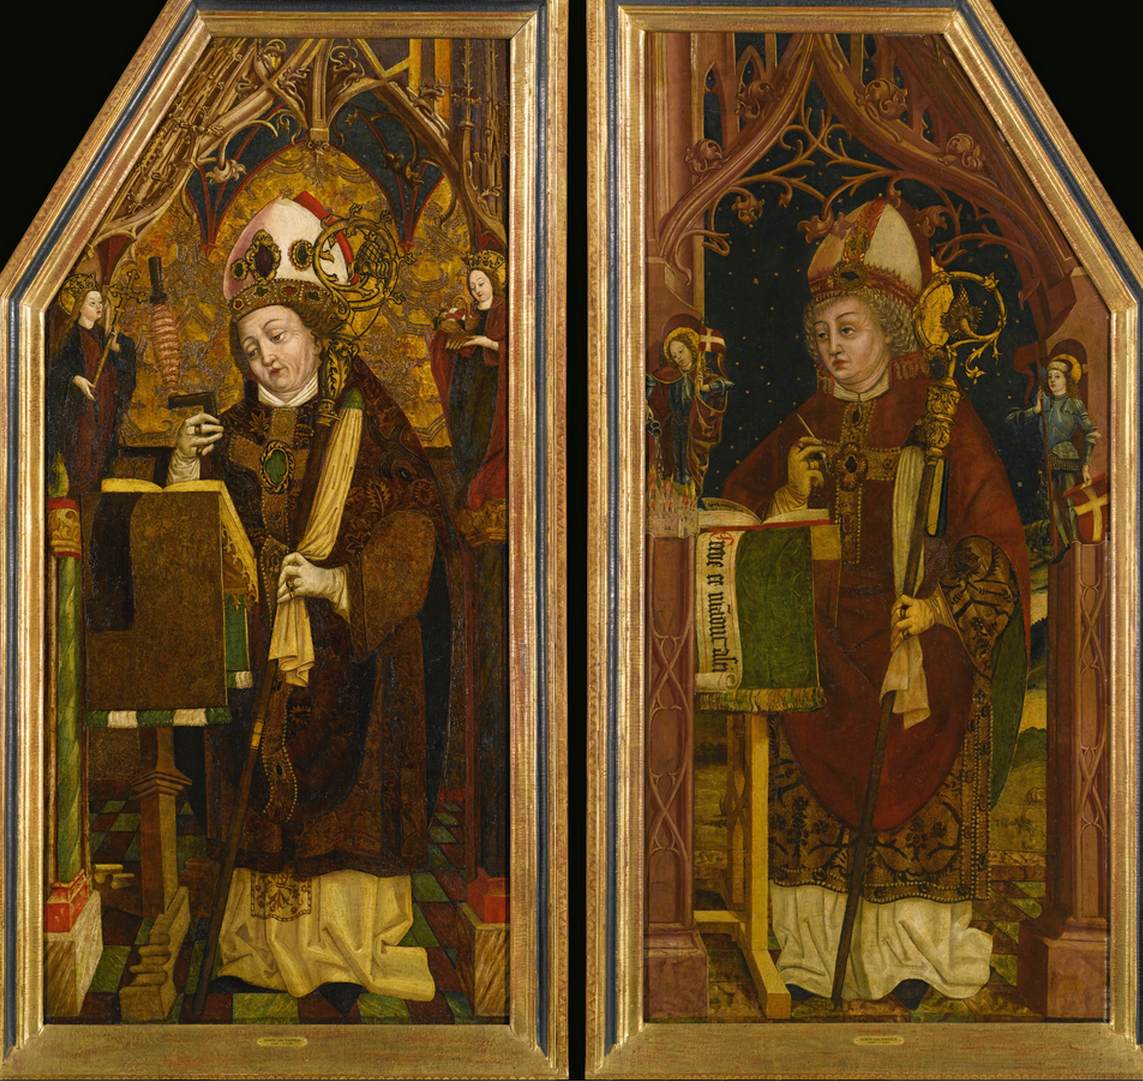 Saint Ambrose with Saint Florian and Saint George; Saint Erasmus with Saint Margaret and Saint Dorothea